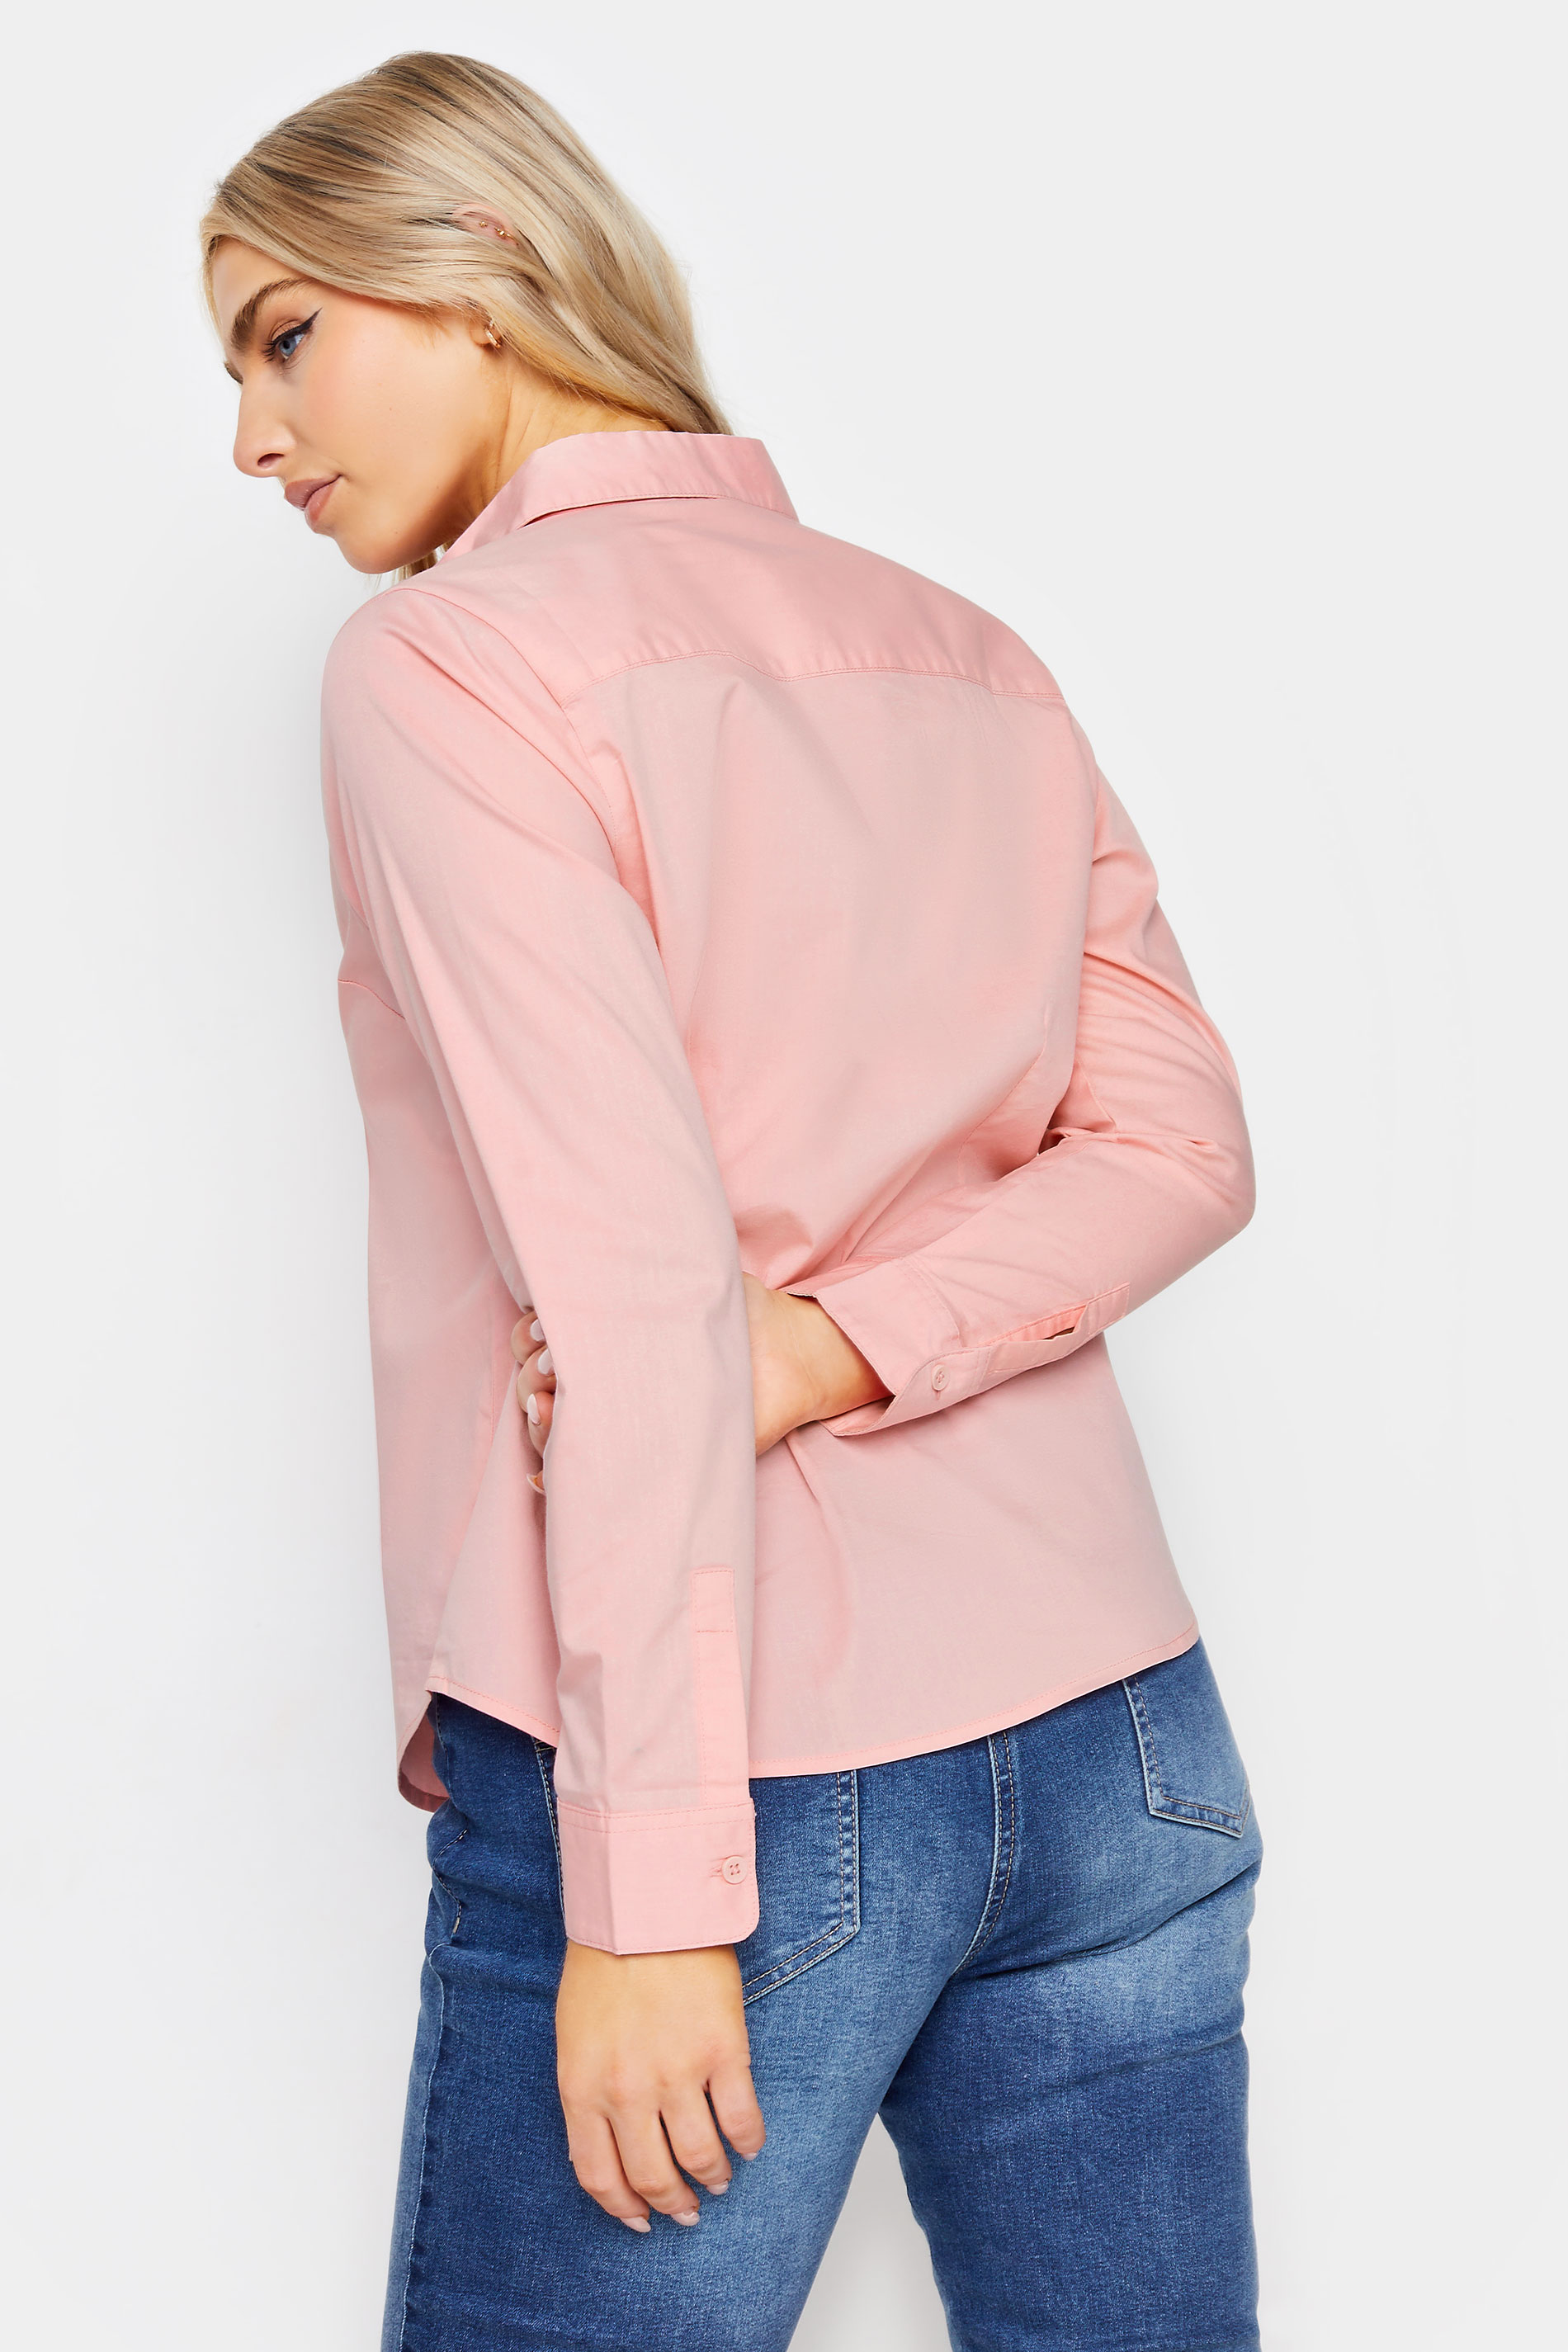 M&Co Pink Cotton Poplin Long Sleeve Shirt | M&Co 3